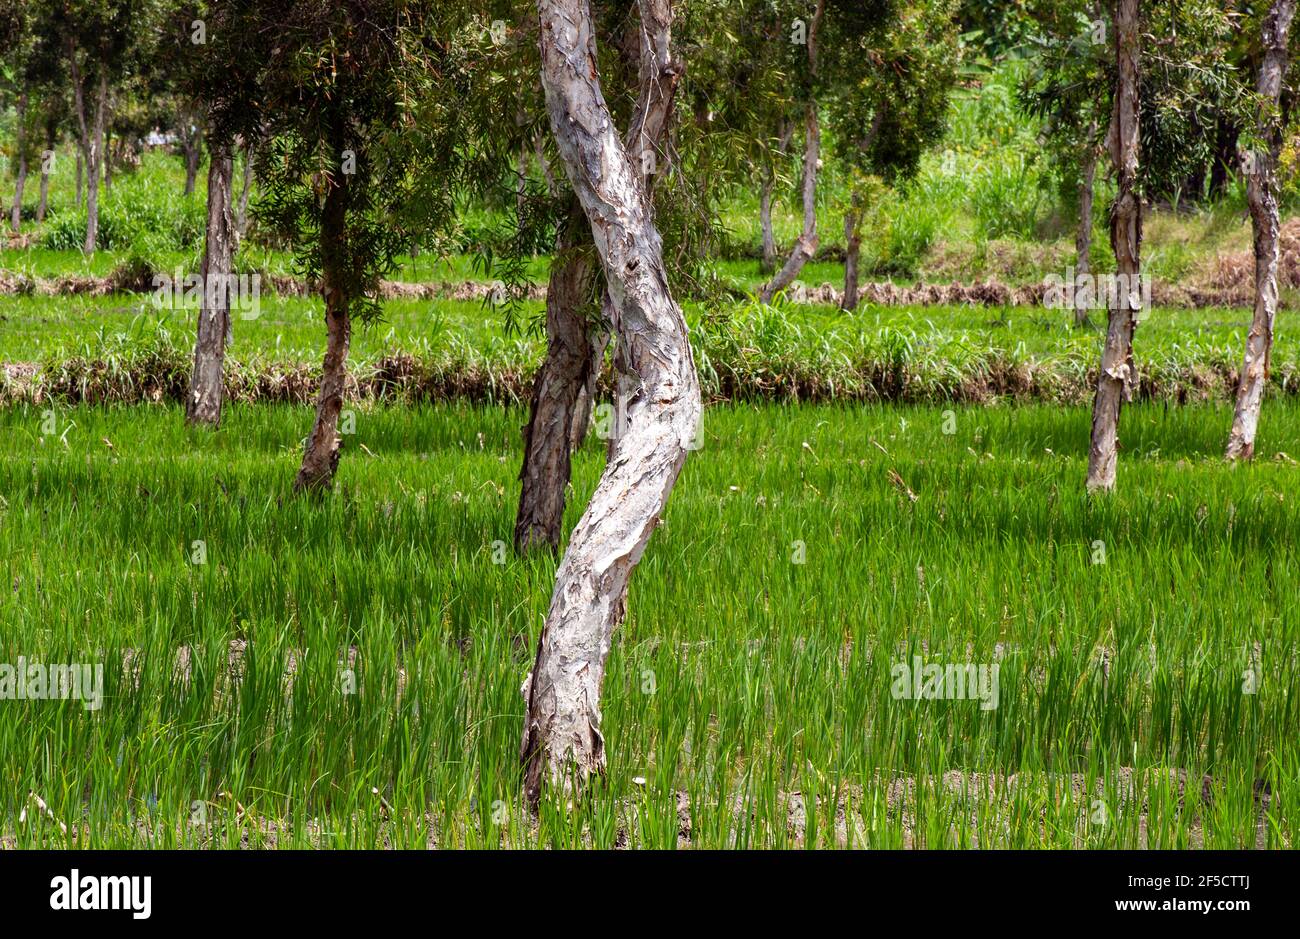 Cajuput trees (Melaleuca cajuputi) in the paddy field, in Gunung Kidul region, Yogyakarta, Indonesia Stock Photo